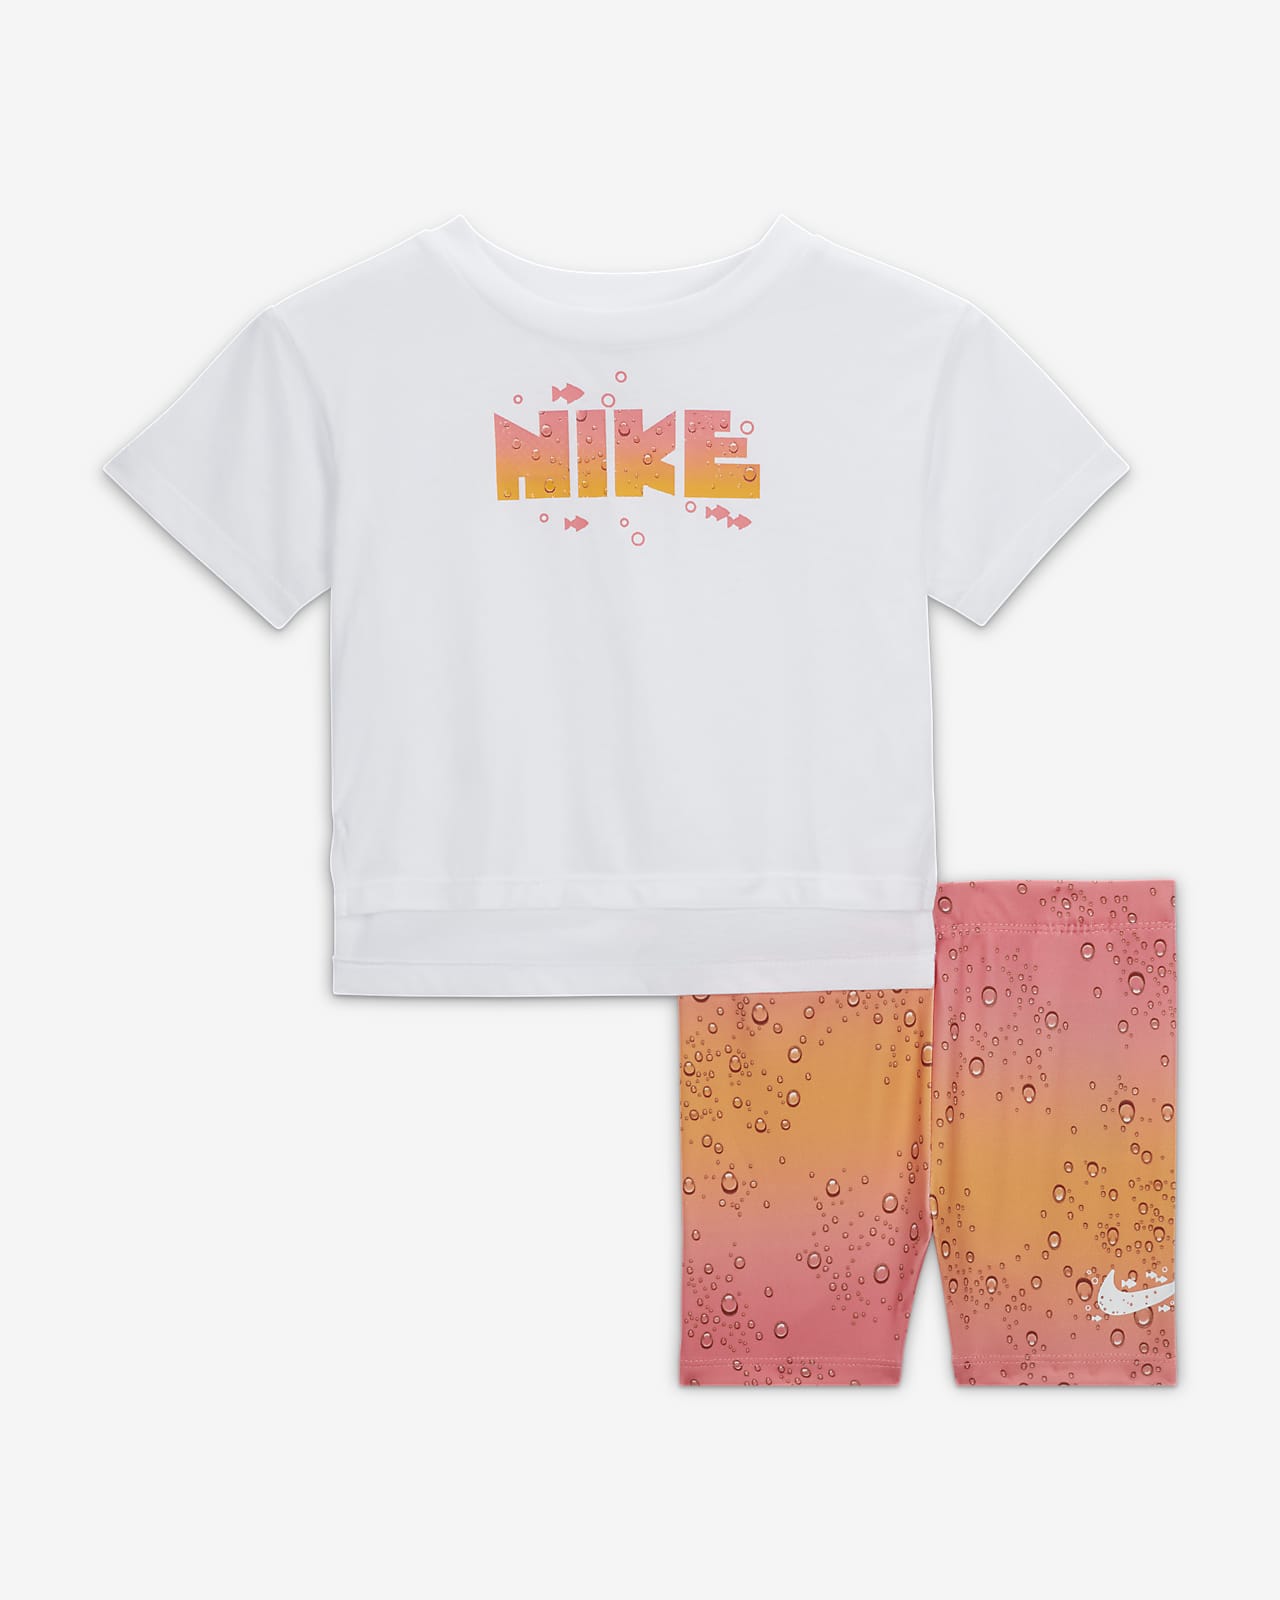 Nike Dri- Fit T-shirt/ Shorts Set Orange